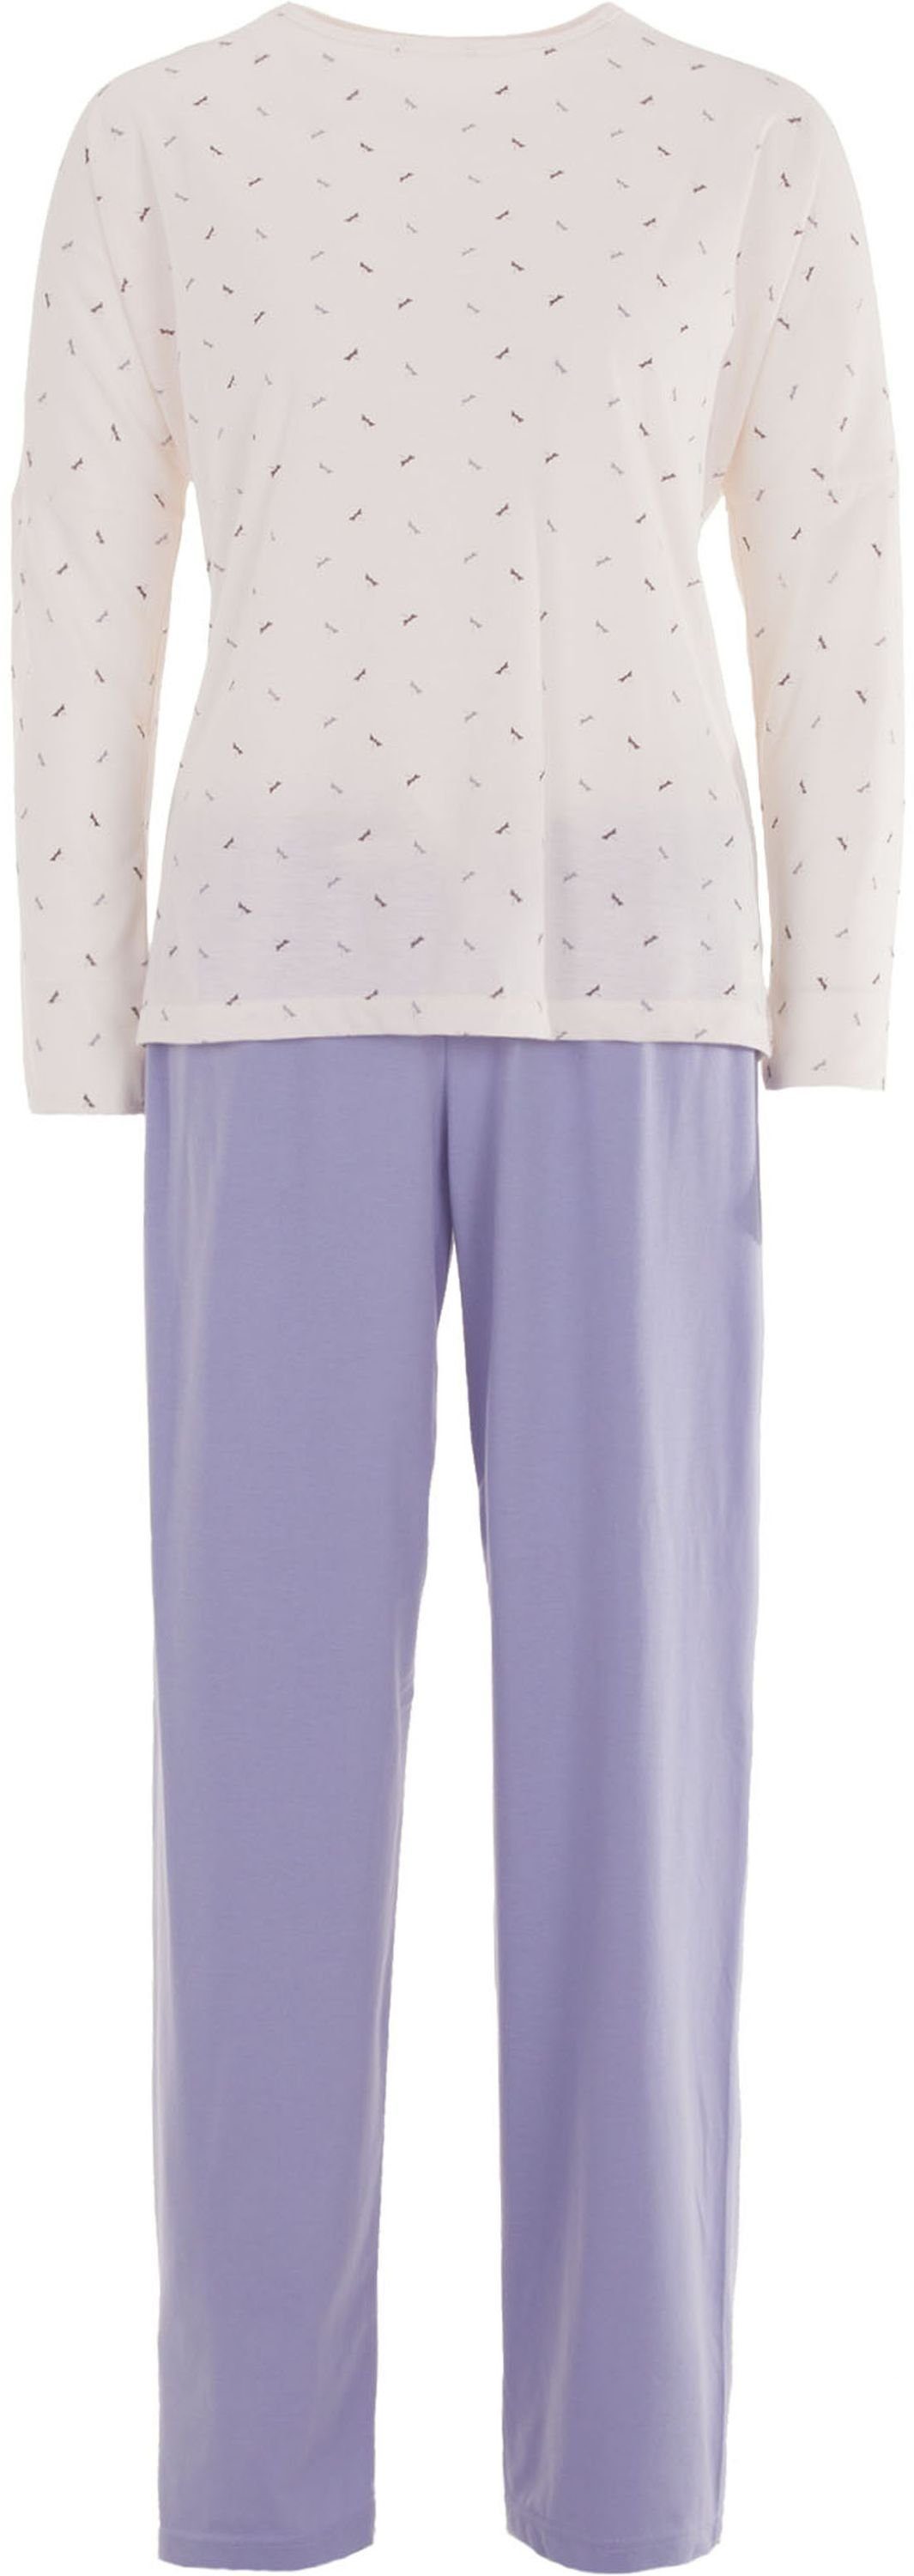 zeitlos Schlafanzug flieder Libelle Set Langarm - Pyjama